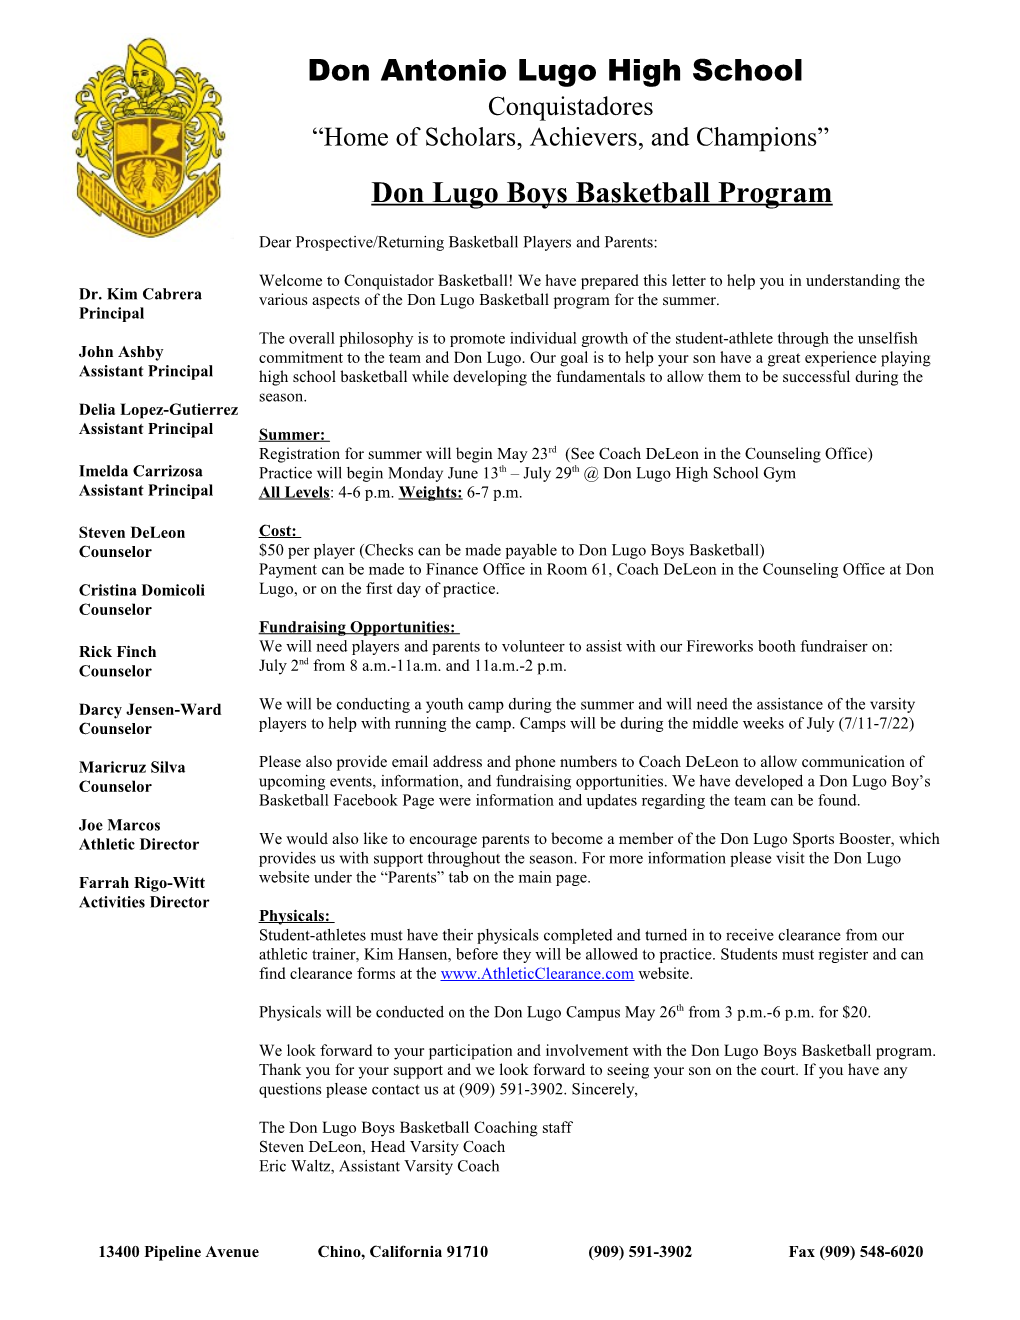 Don Lugo Boys Basketball Program